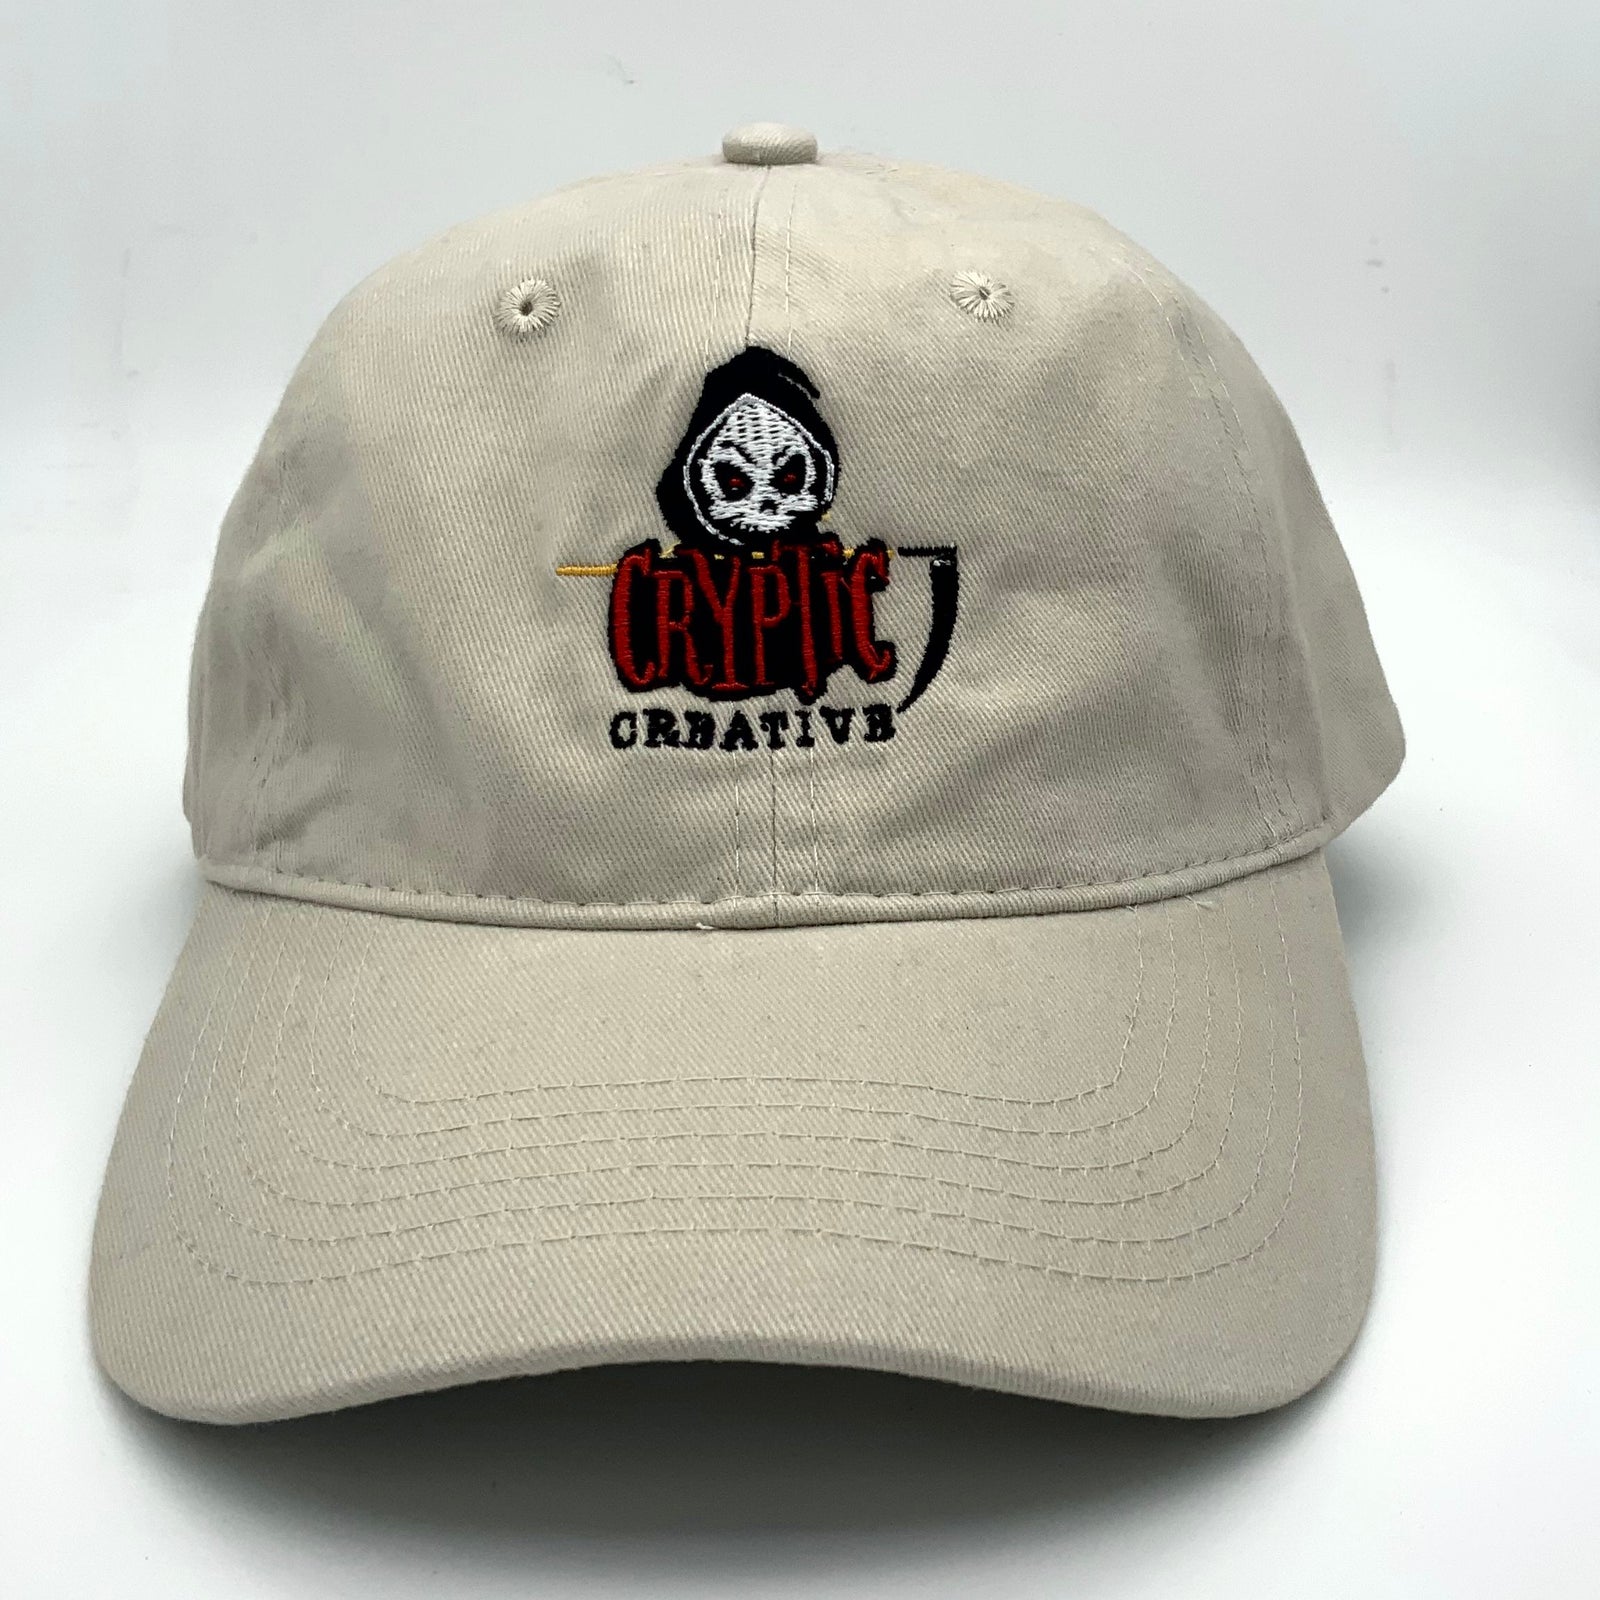 Cryptic Creative Stone colored Cap